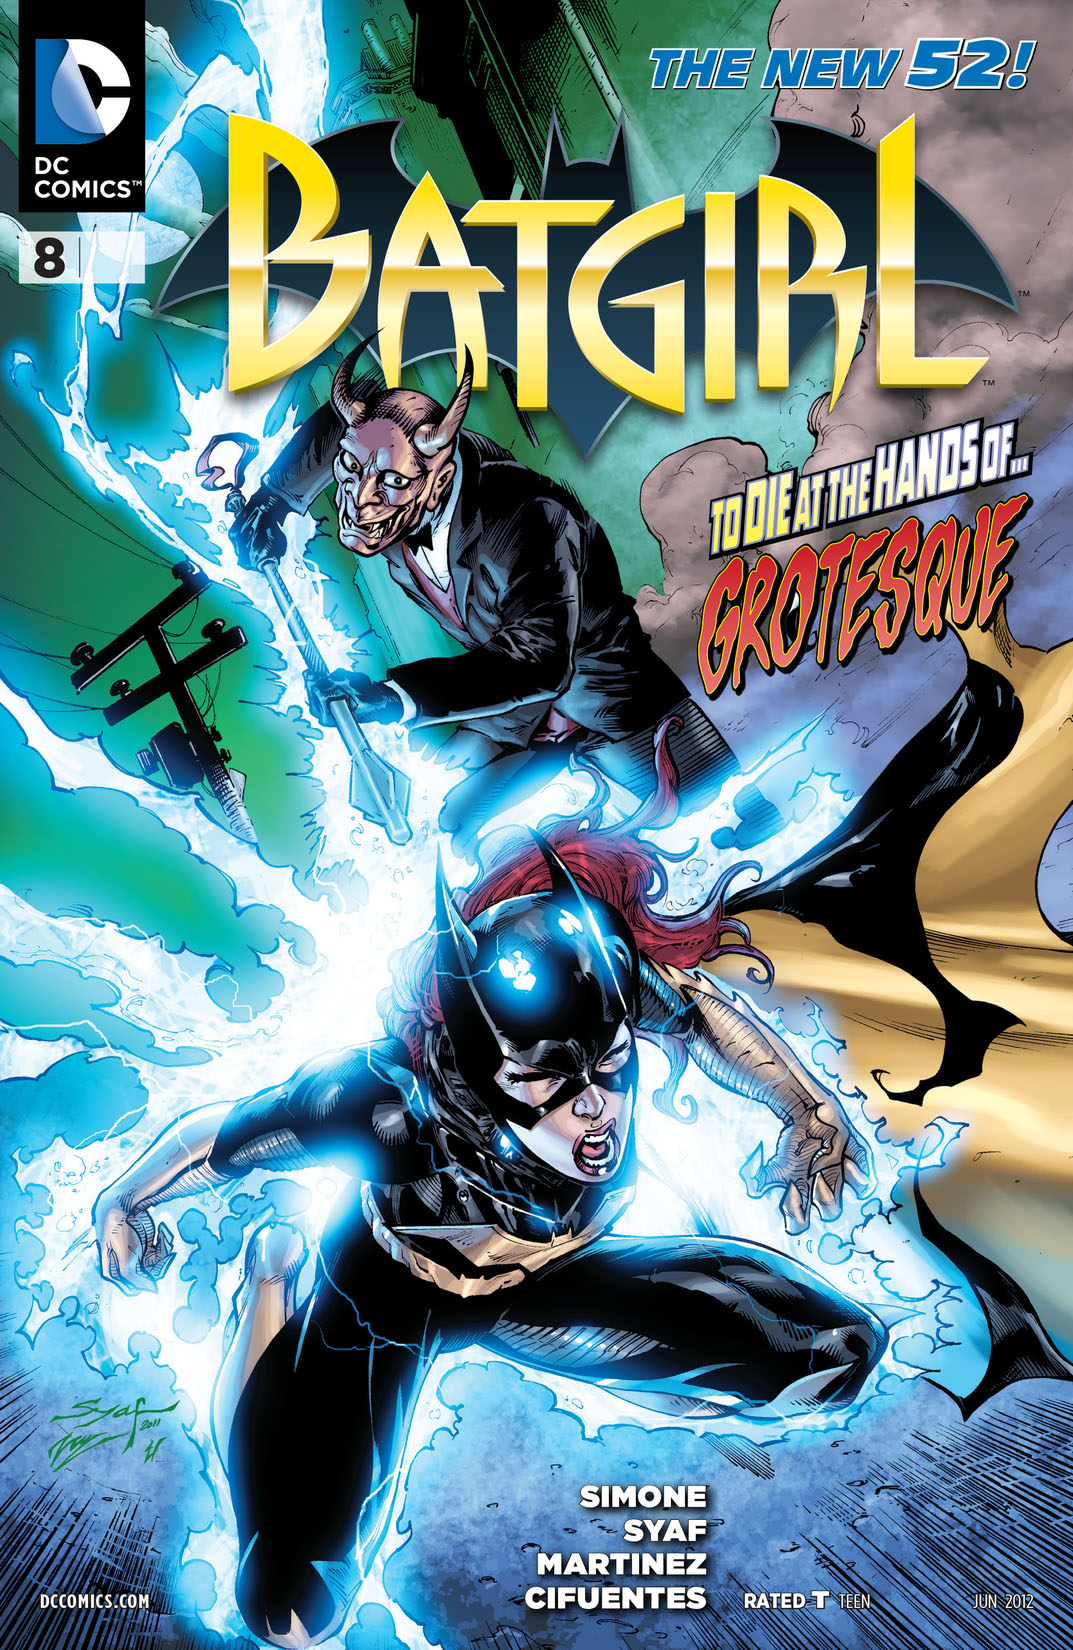 Batgirl (2011-) #8 preview images